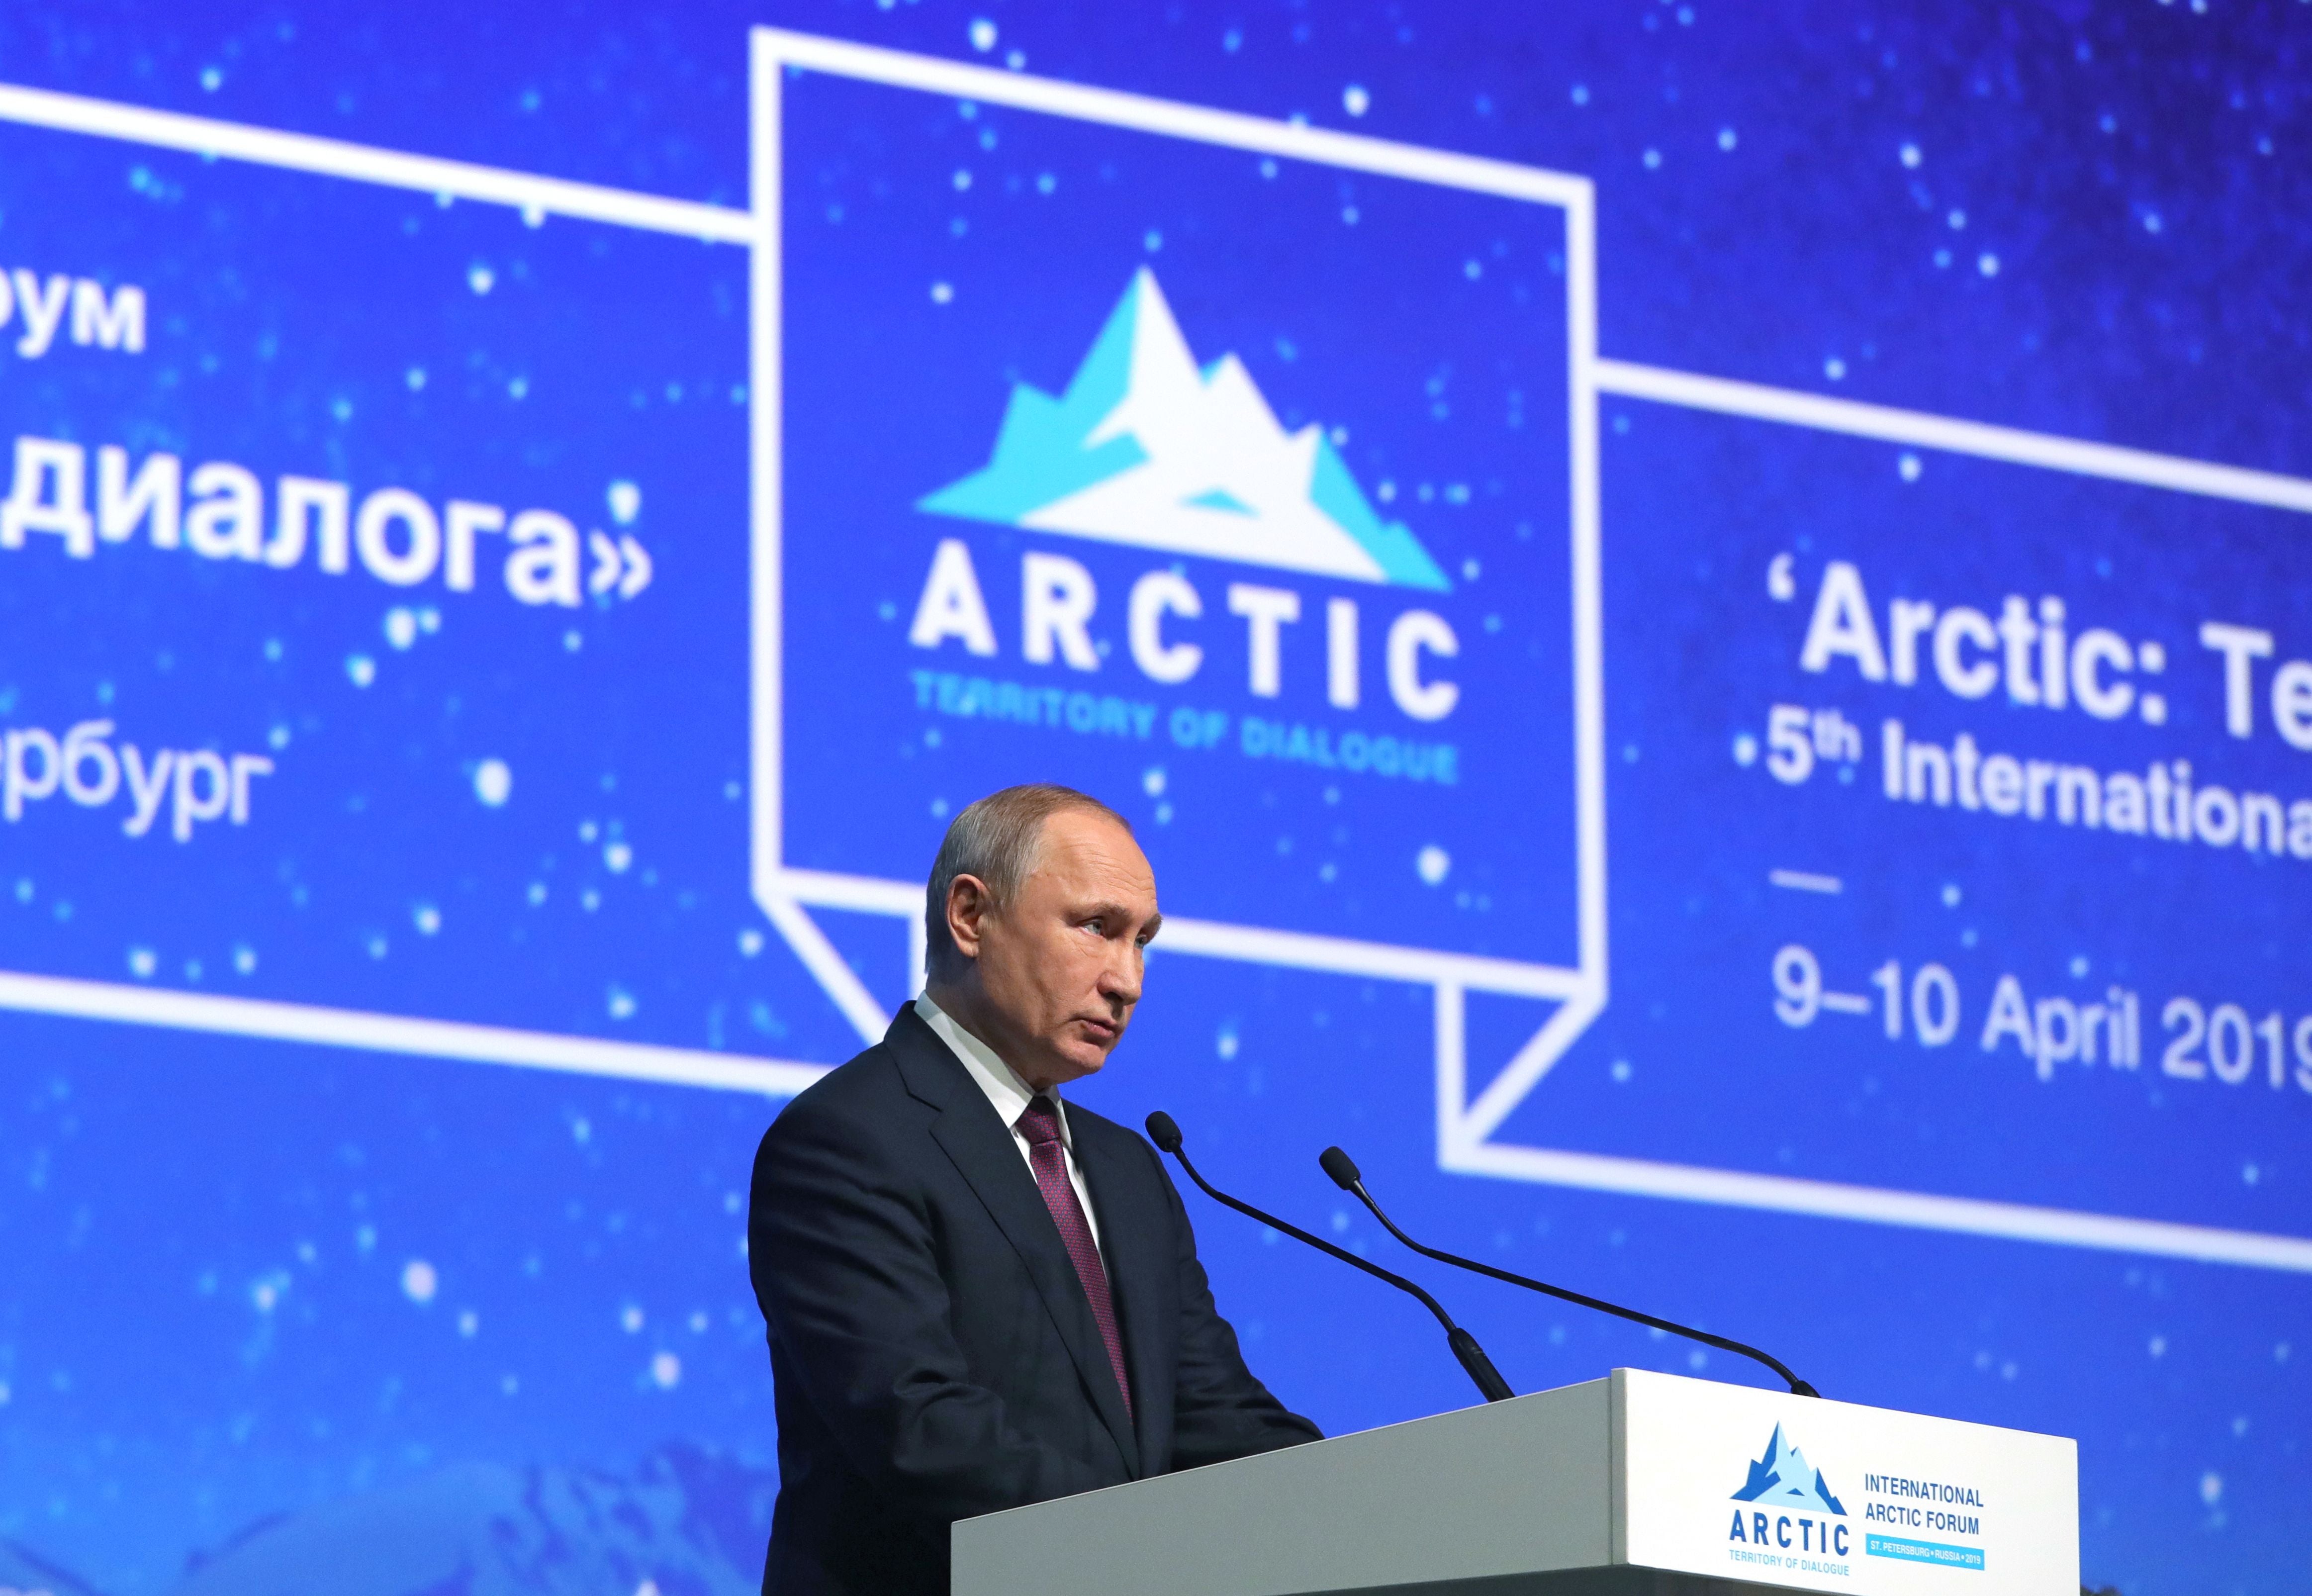 Putin at the International Arctic Forum in Saint Petersburg in 2019